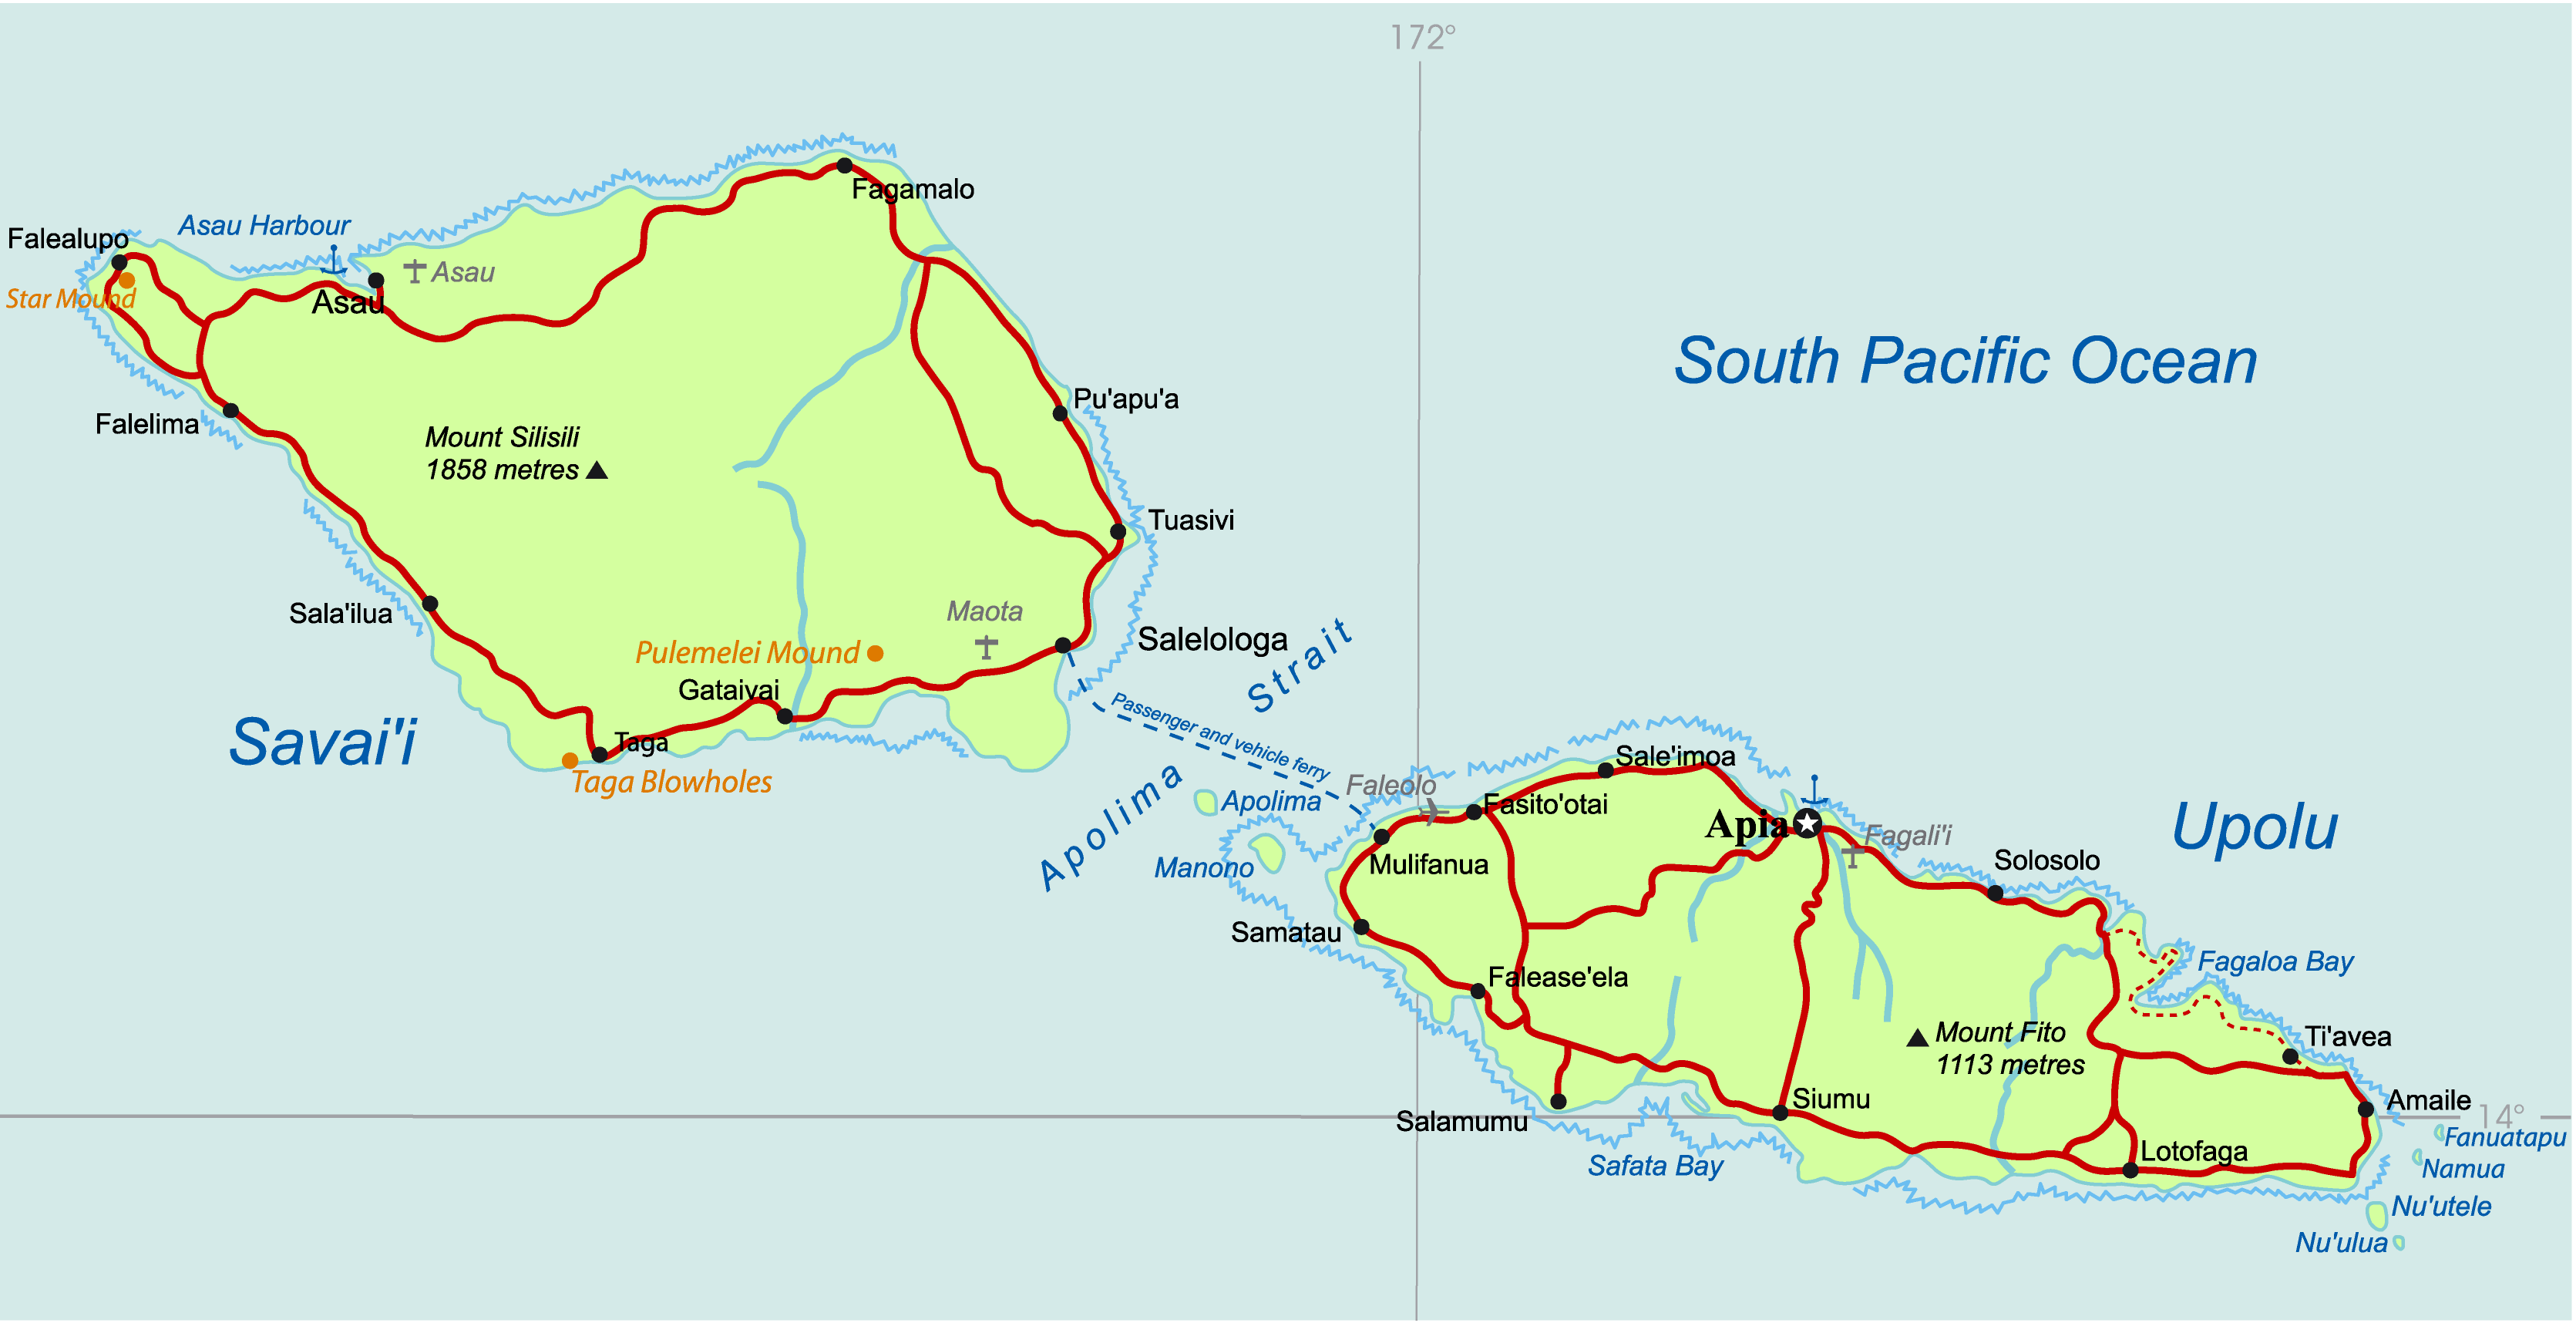 https://upload.wikimedia.org/wikipedia/commons/3/3a/Samoa_map_800px.png